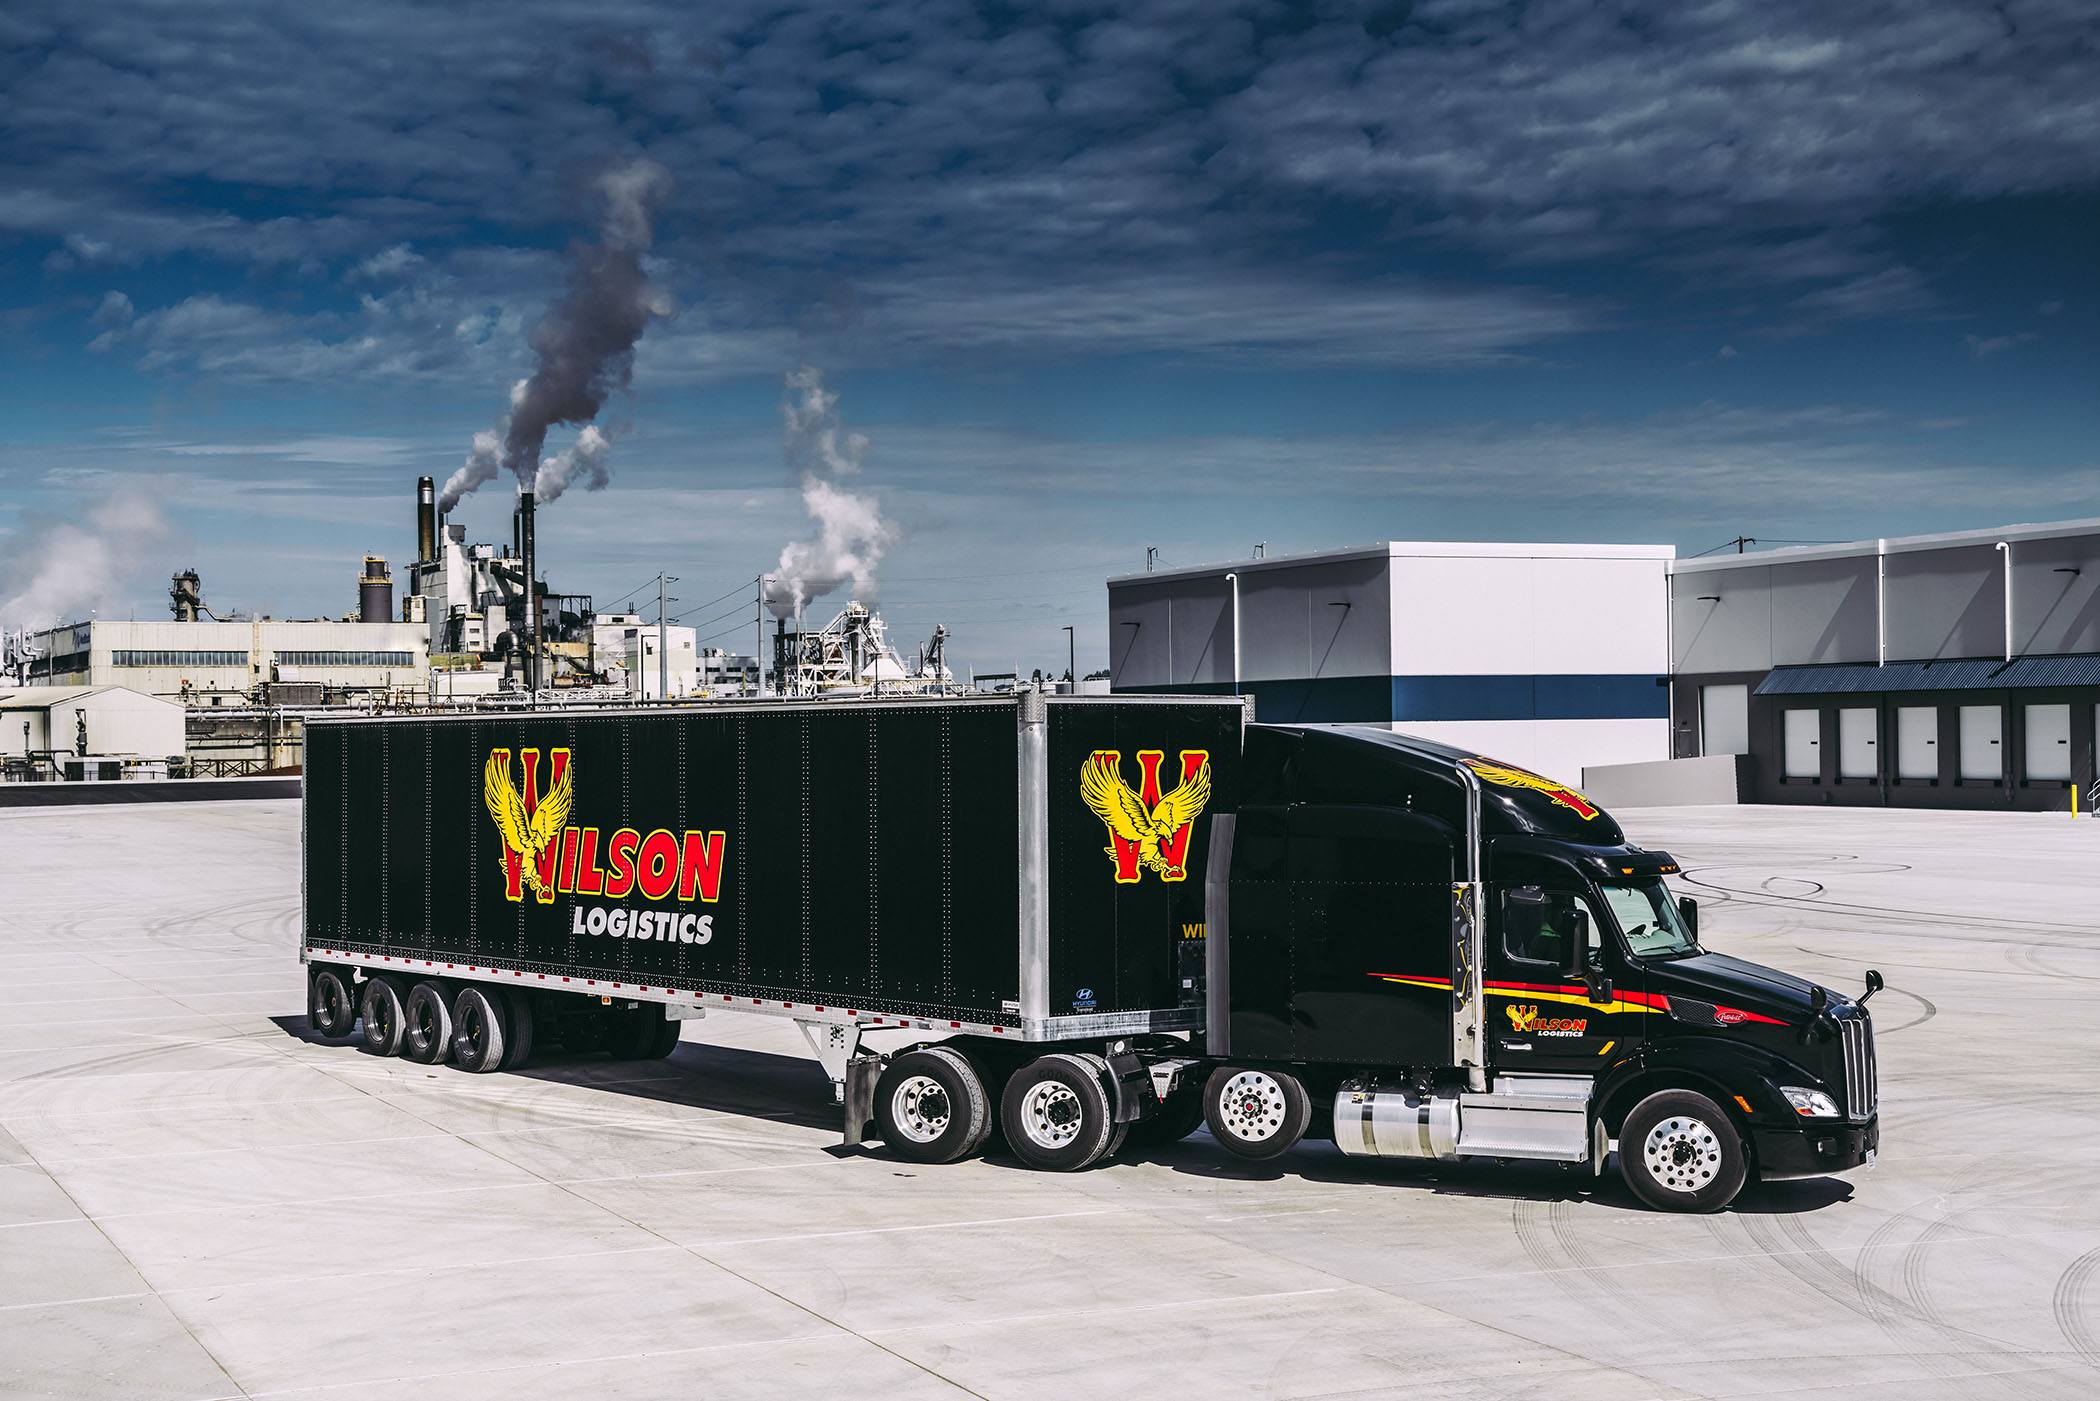 Wilson Logistics has company-sponsored training